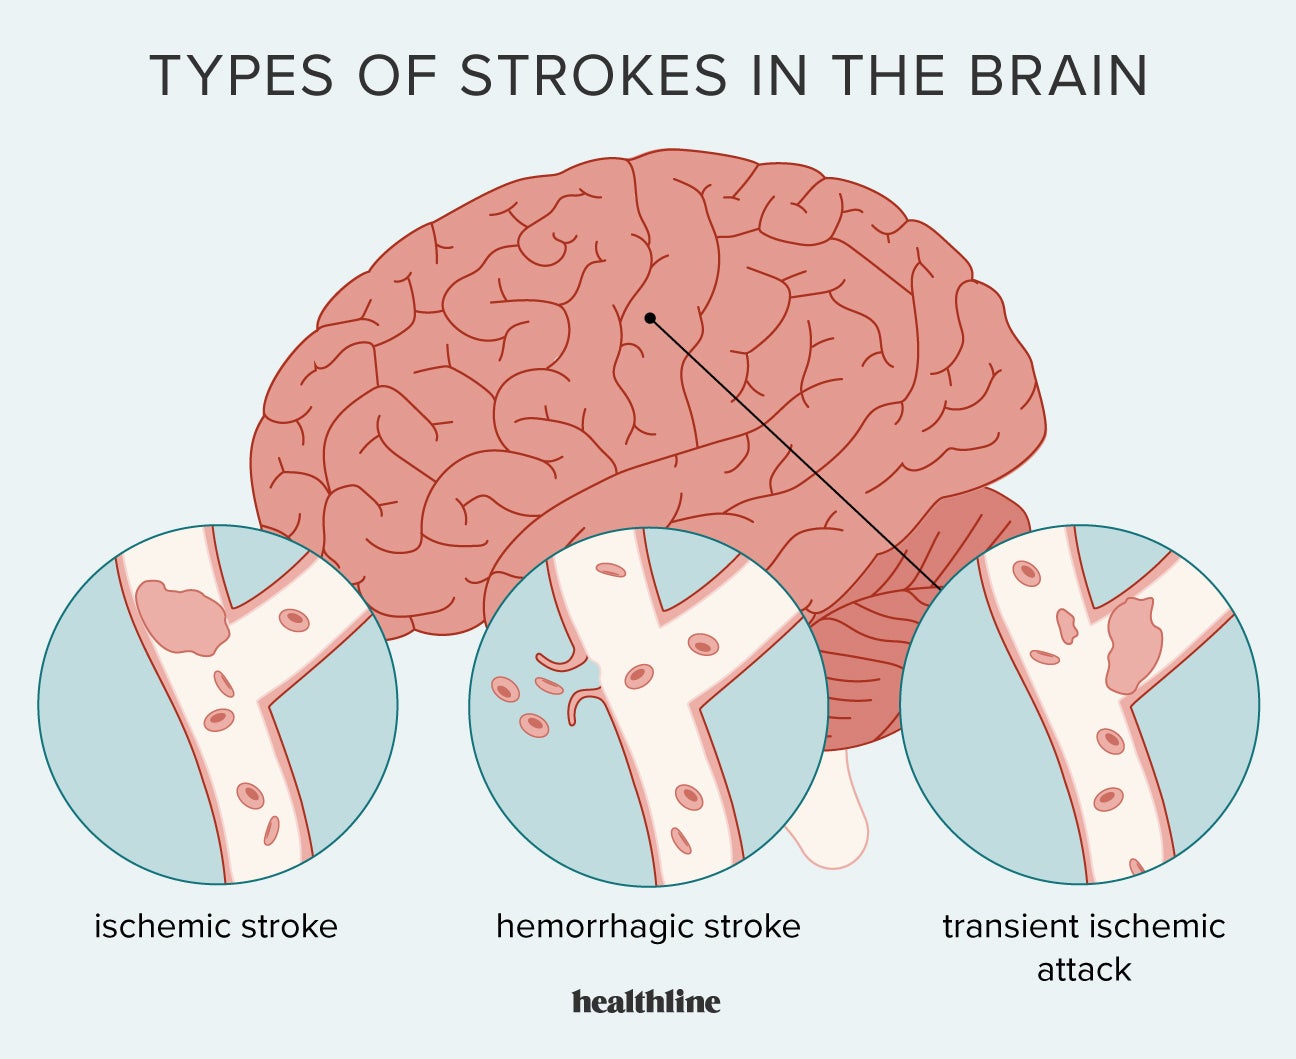 Stroke-IMPaCT  Brain Health Day